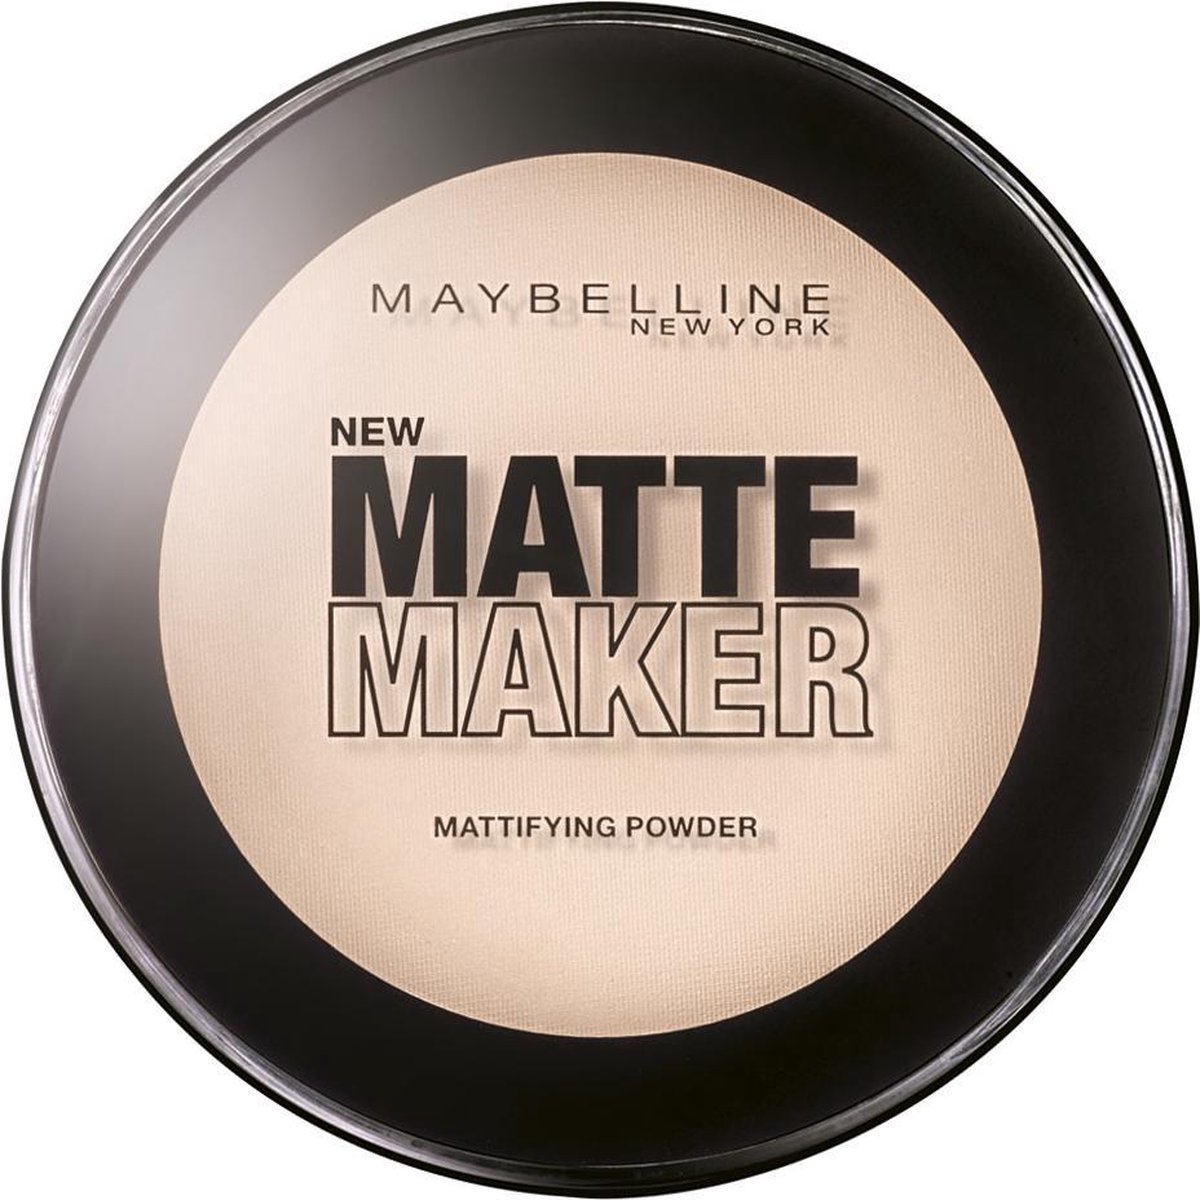 Maybelline Matte Maker - 50 Sun Beige - Poeder - Maybelline